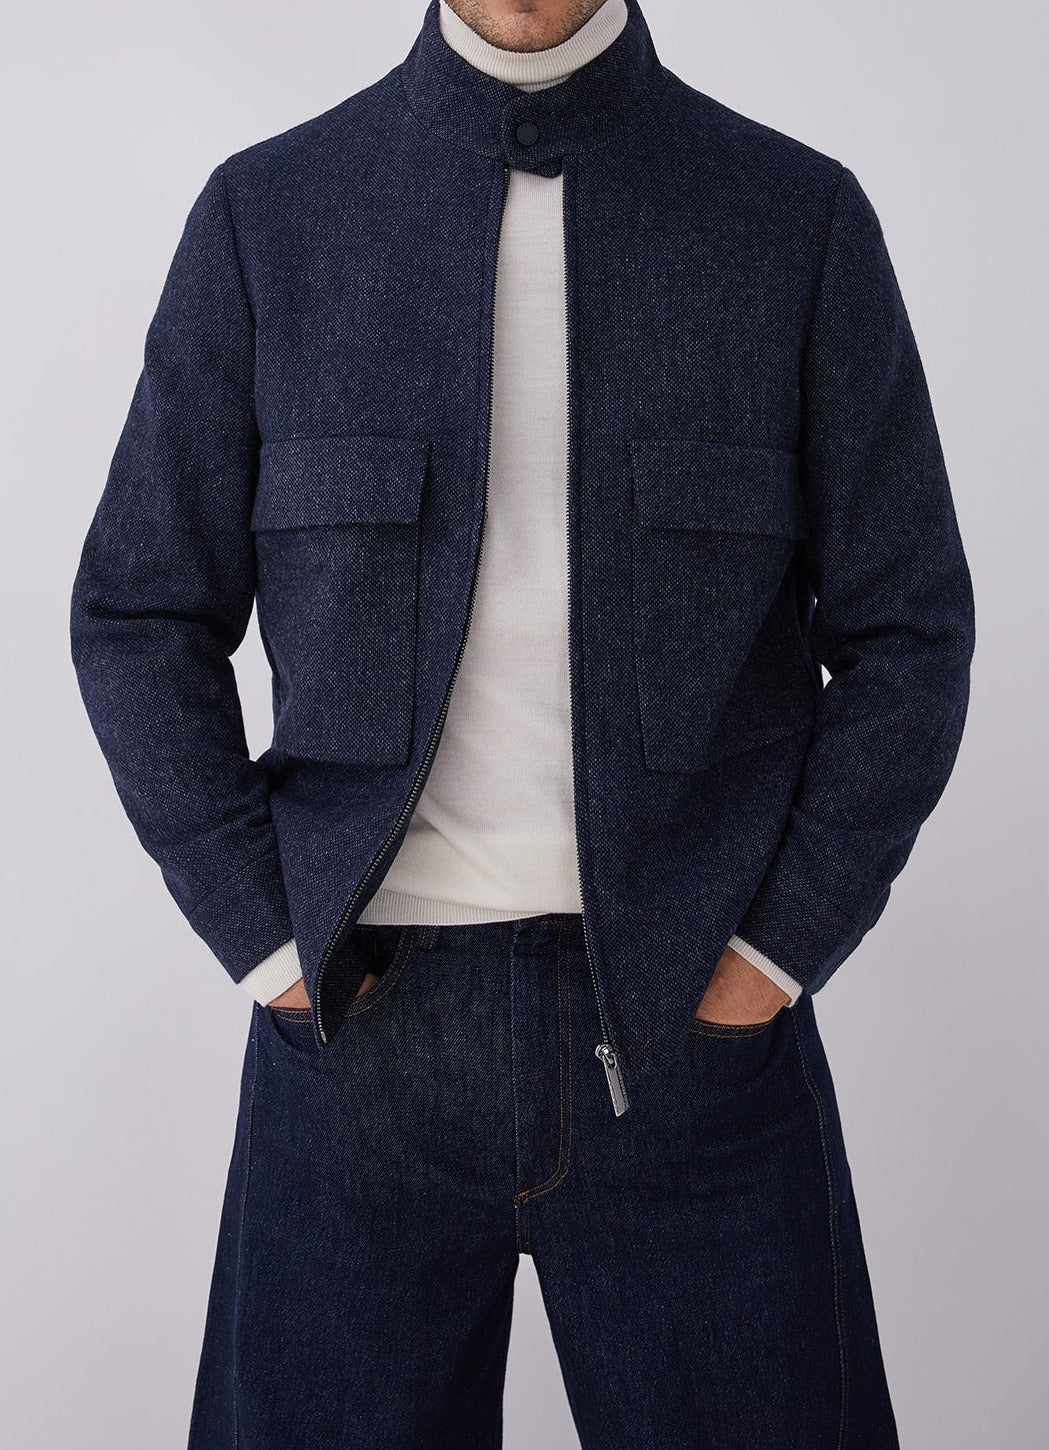 Men Overshirt | Blue Mottled Wool Jacket With Patch Pockets by Spanish designer Adolfo Dominguez